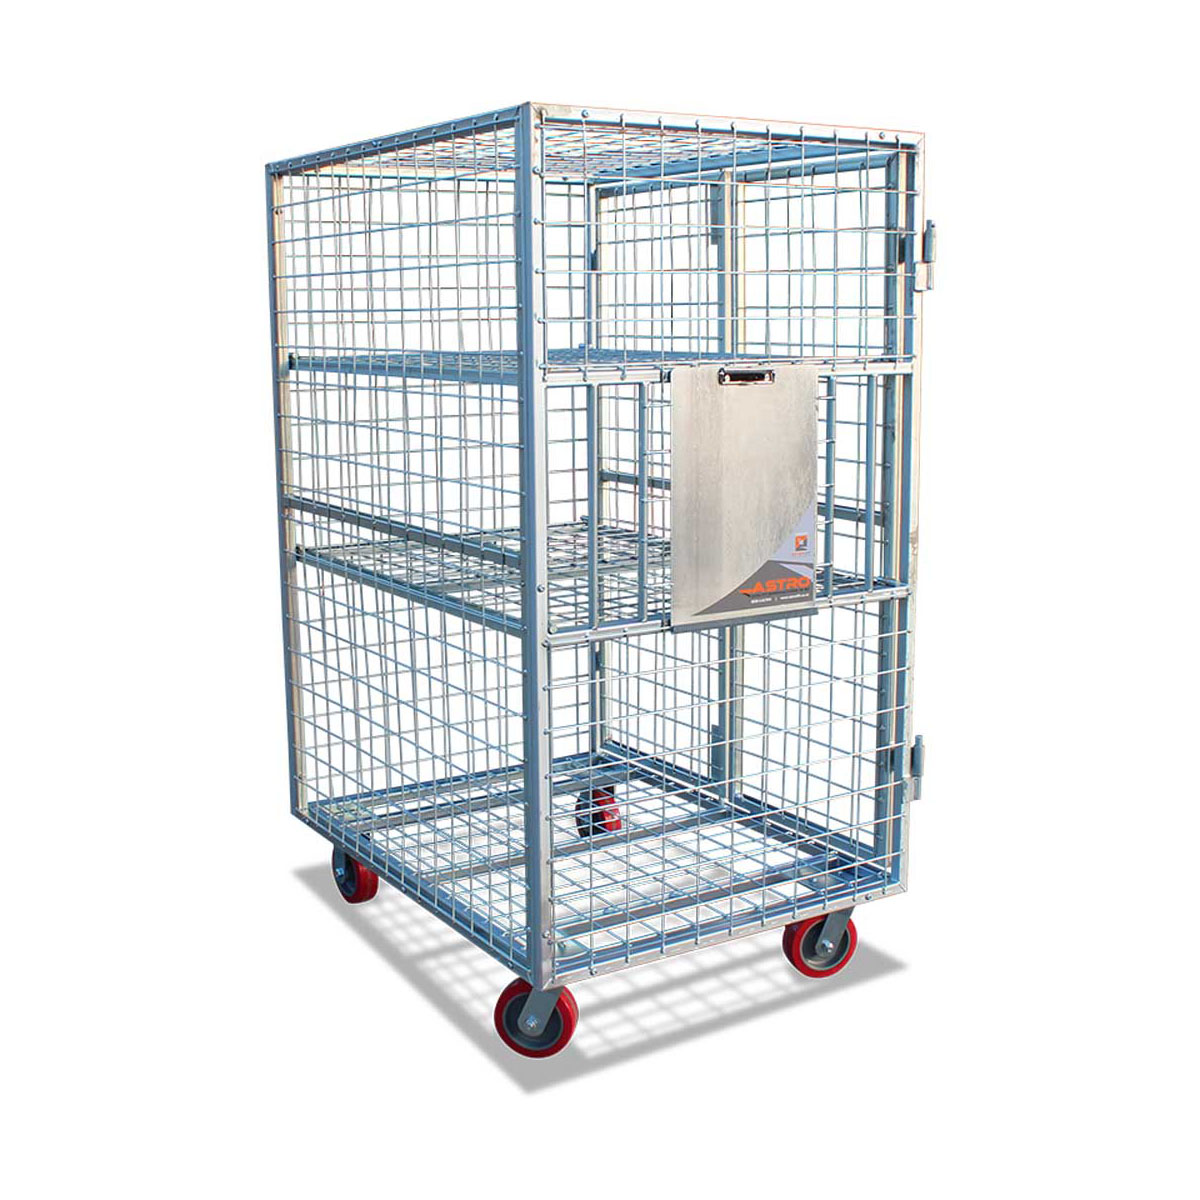 Buy Dual-Door Cage Trolley  in Cage Trolleys from Astrolift NZ